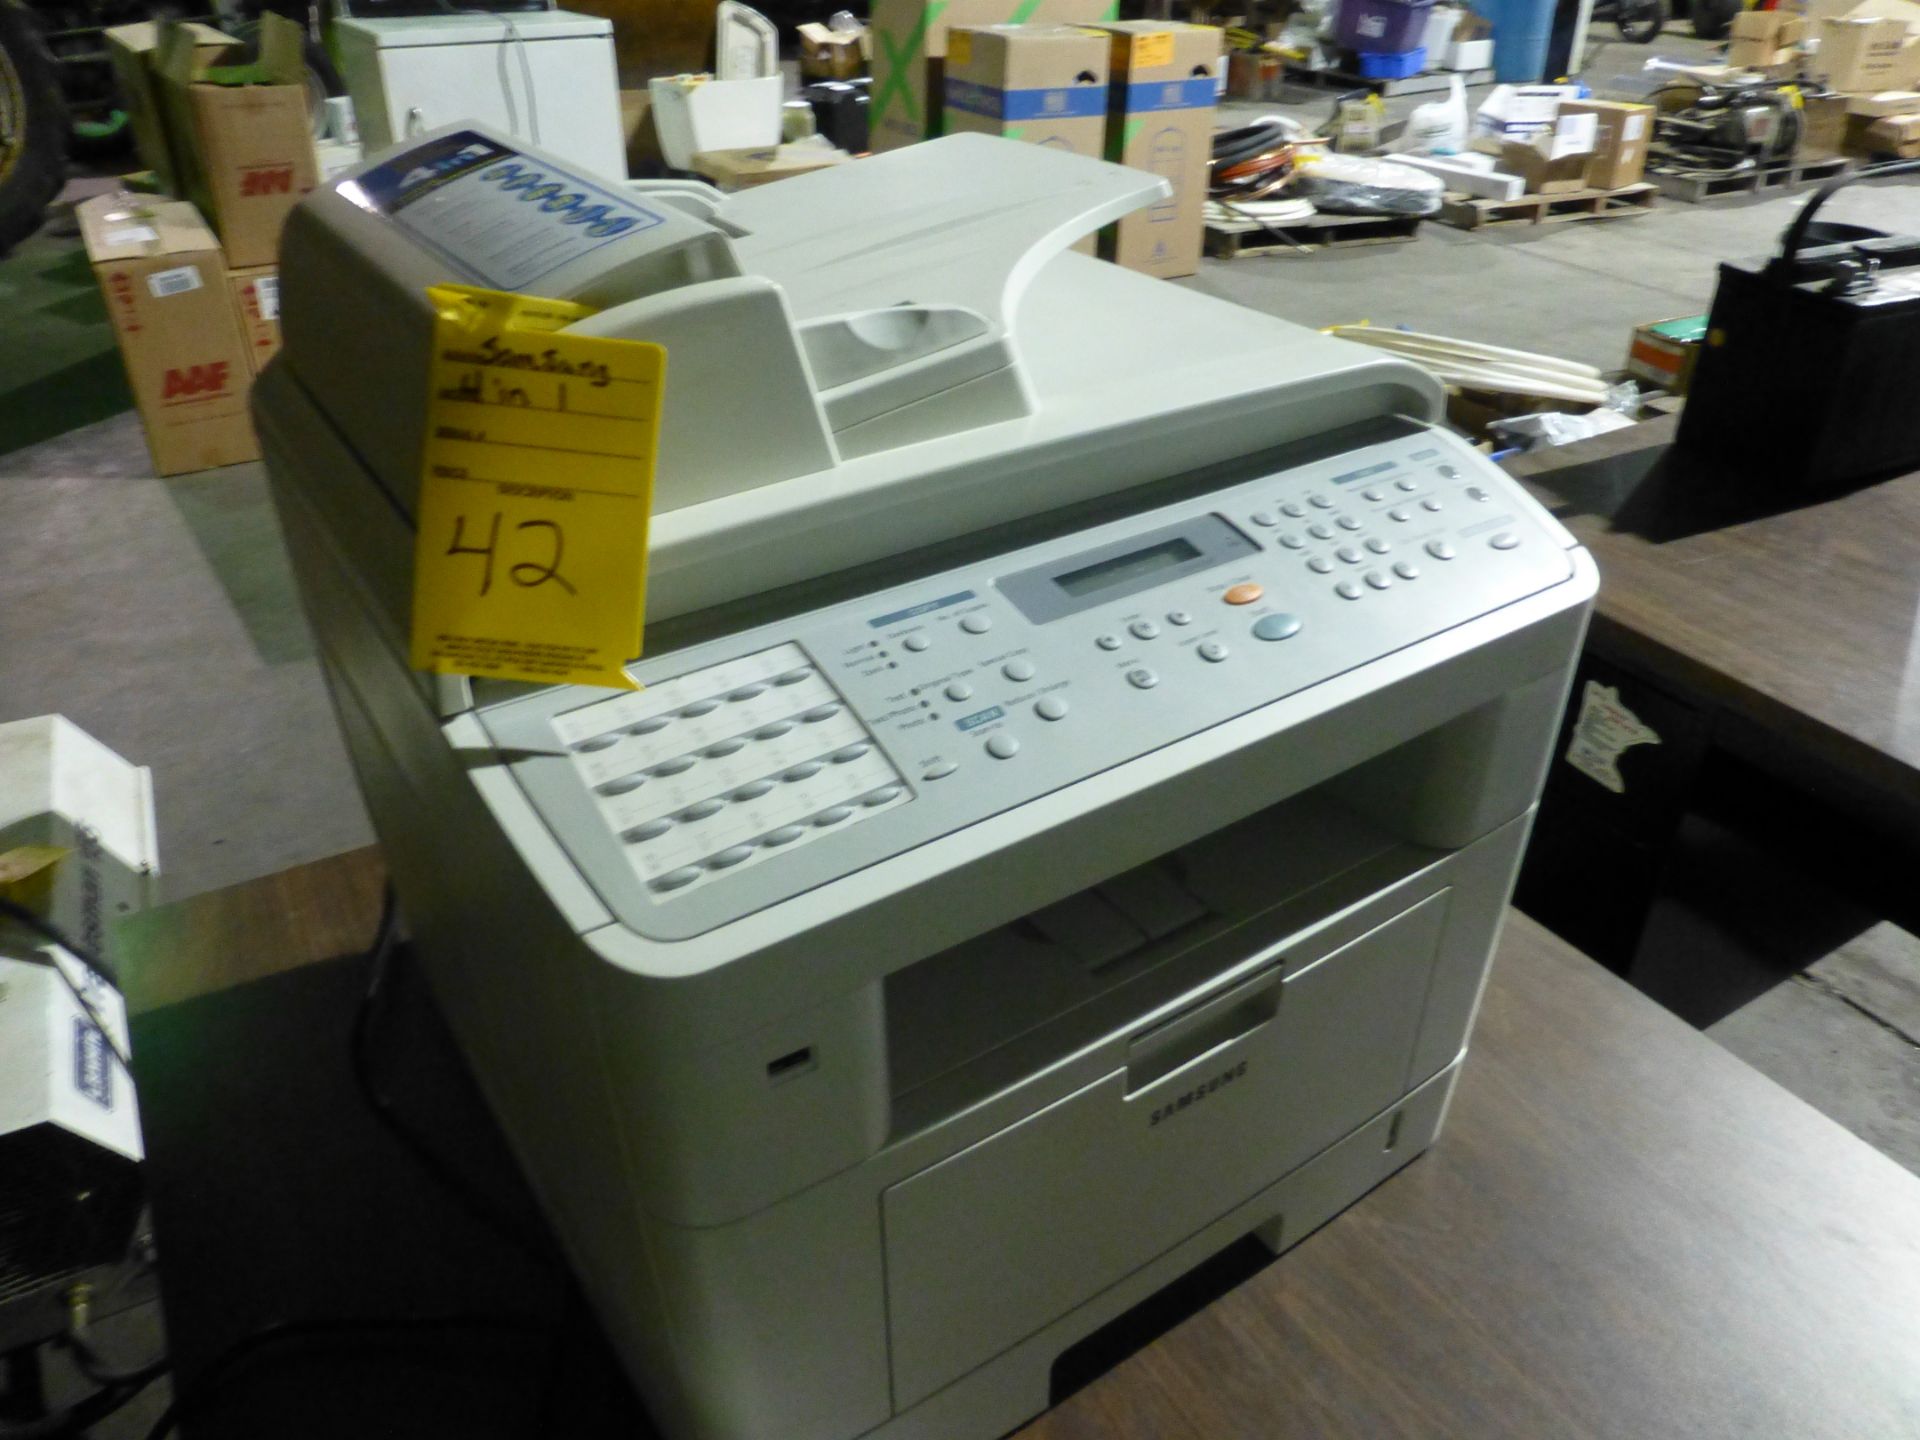 Samsung 4in1 printer/fax/copier/scanner - Image 3 of 4